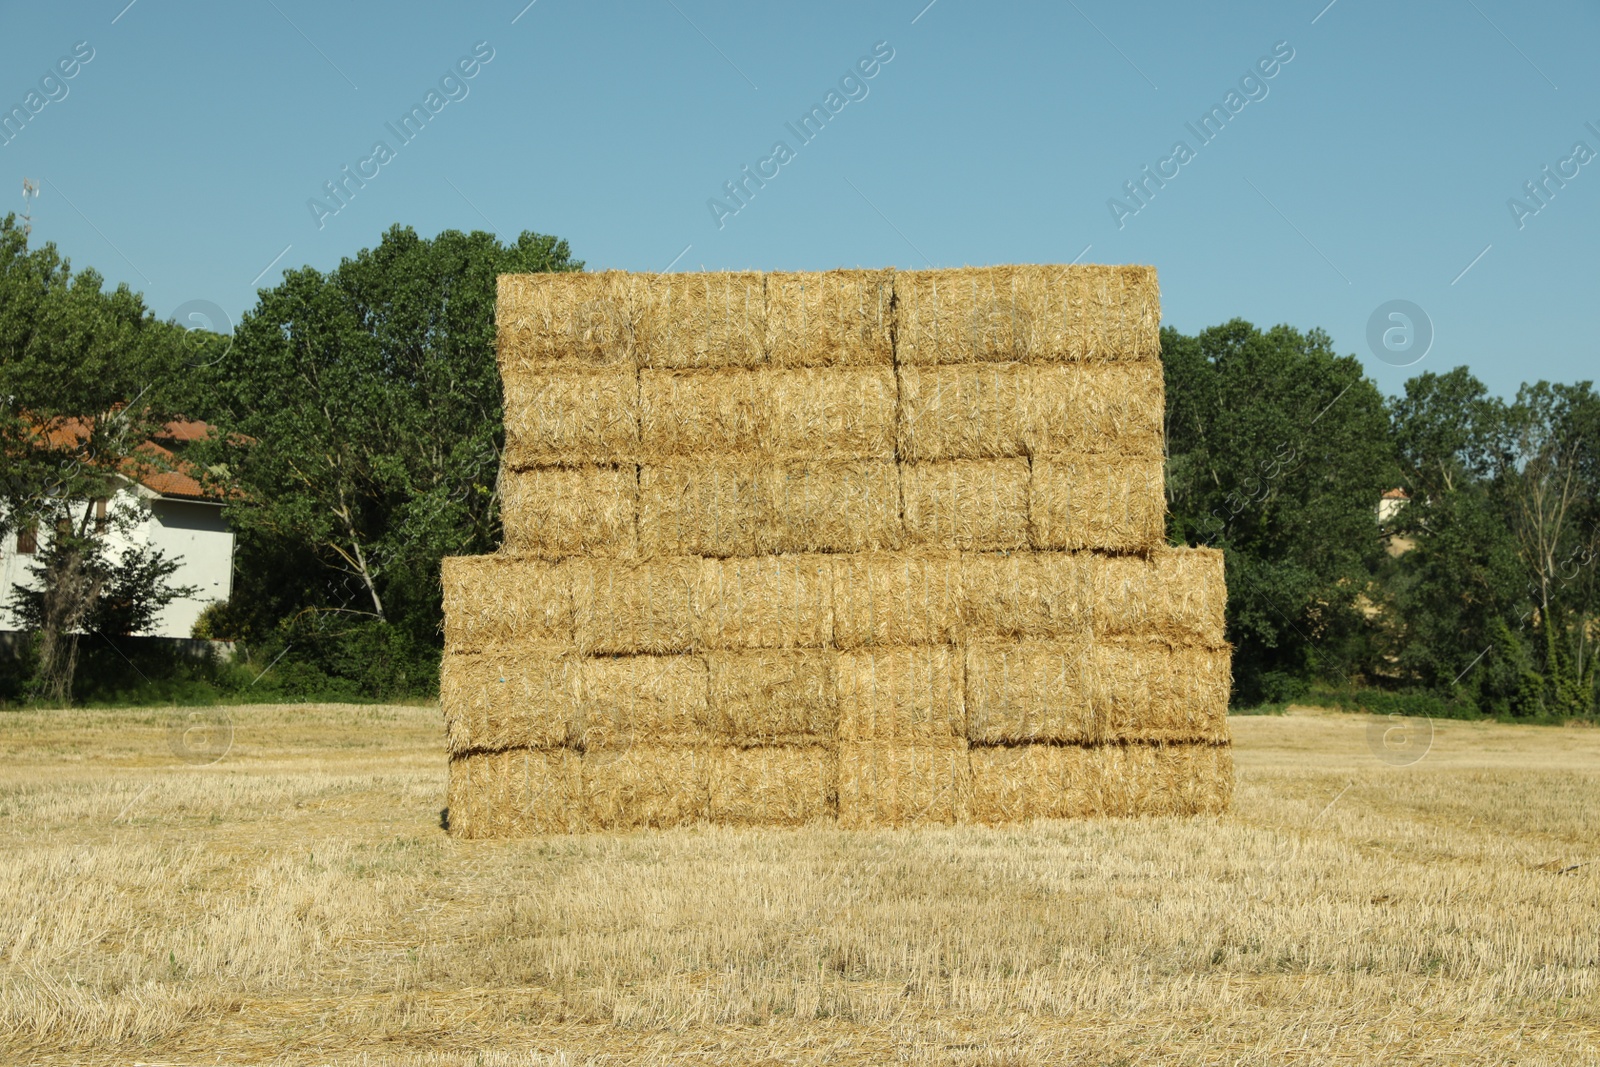 Photo of Many hay bales outdoors on sunny day